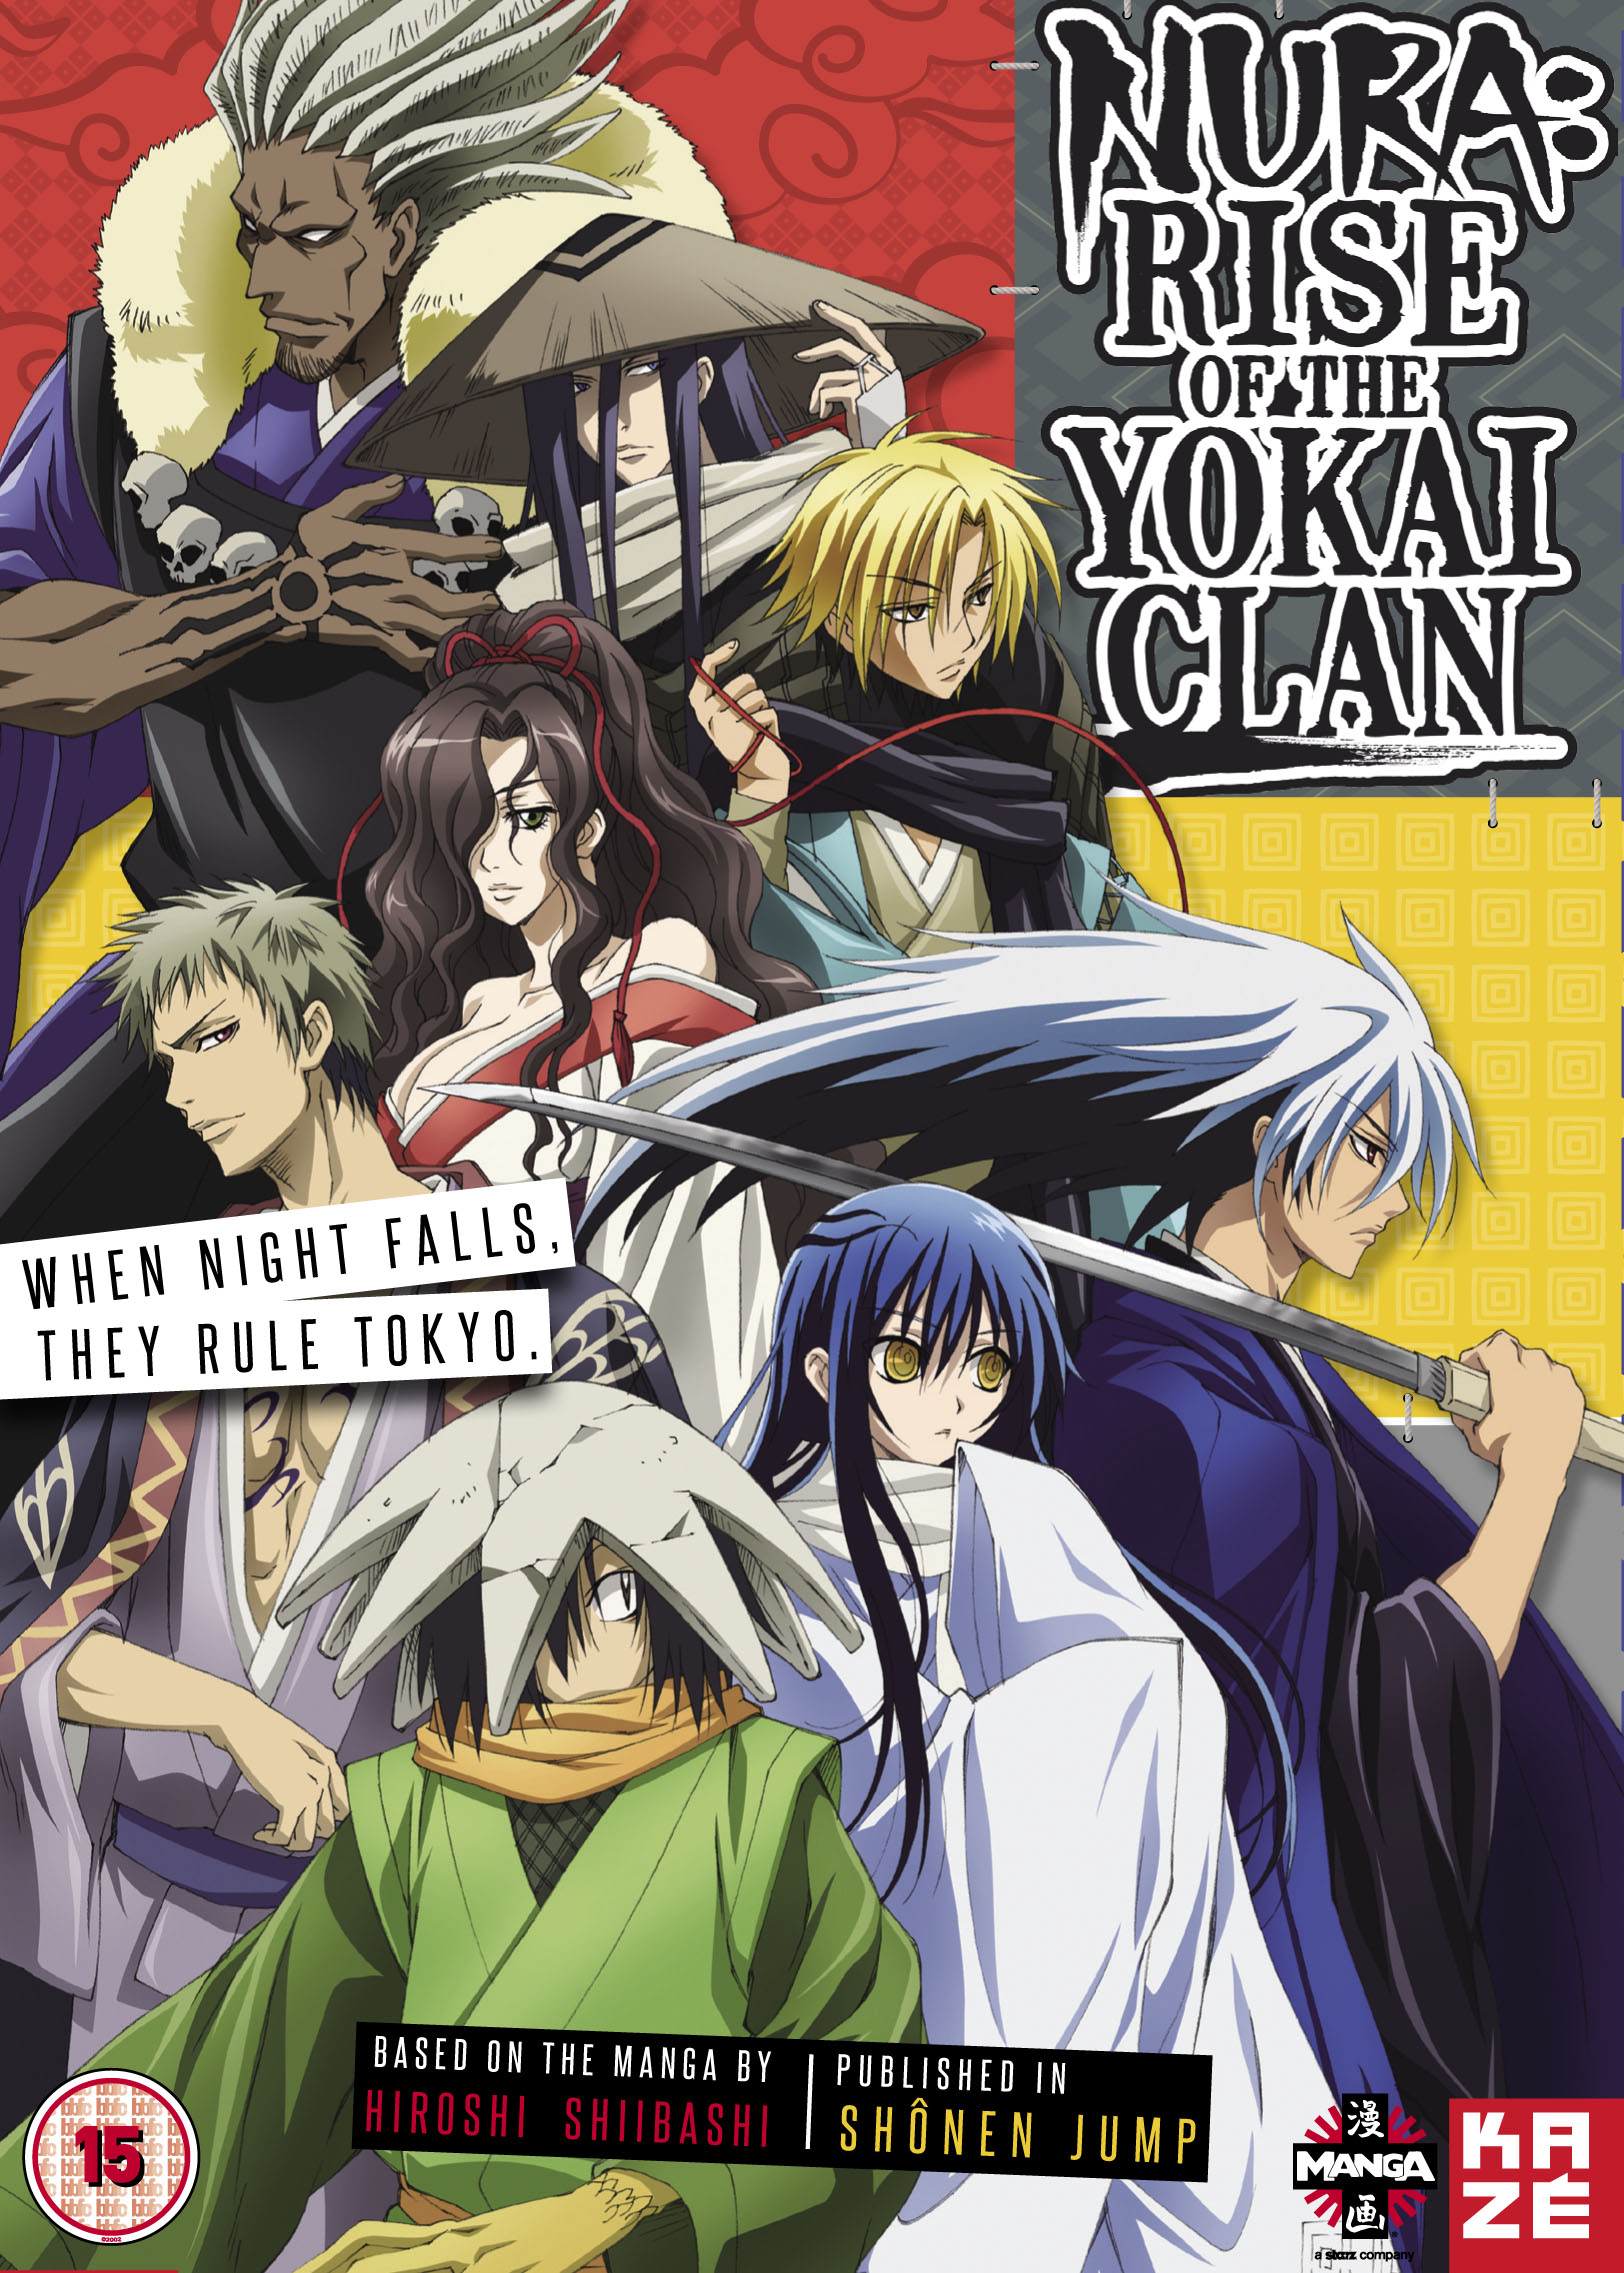 Shonen Jump NURA RISE OF THE YOKAI CLAN (2008) Anime Blu-Ray in DVD Case  782009242741 | eBay